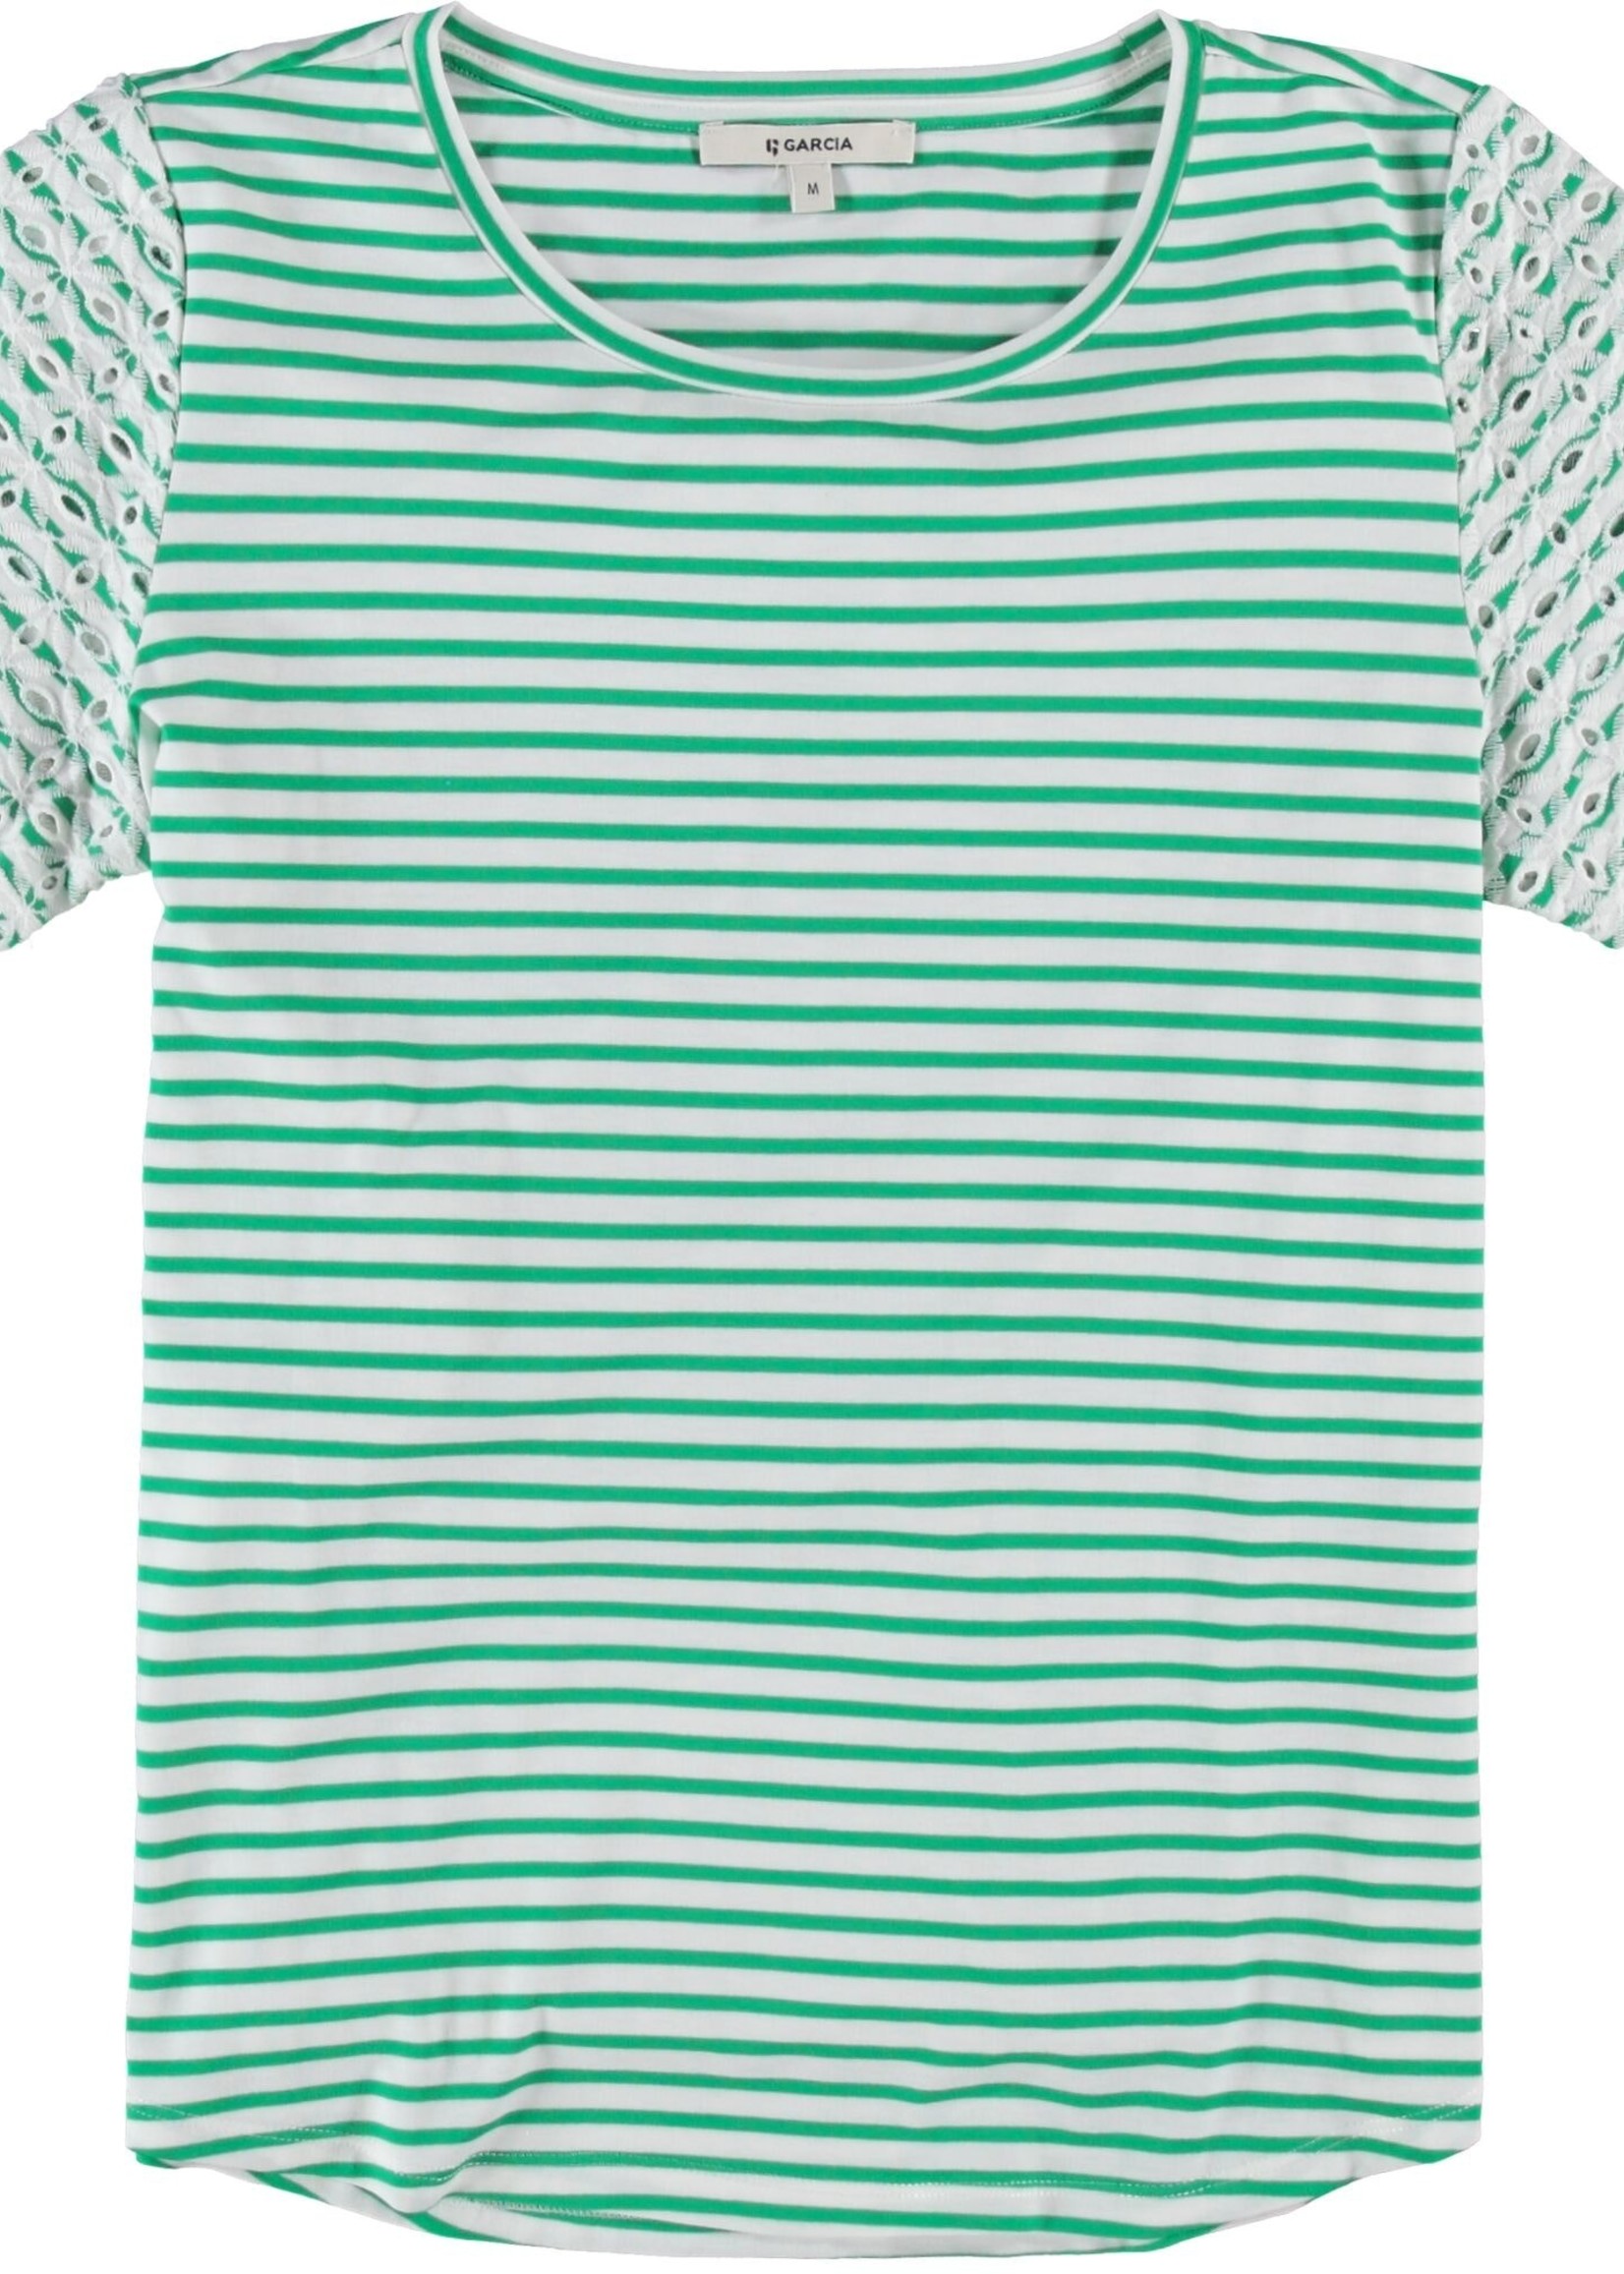 Garcia Striped T-Shirt w/ Sleeve Detail